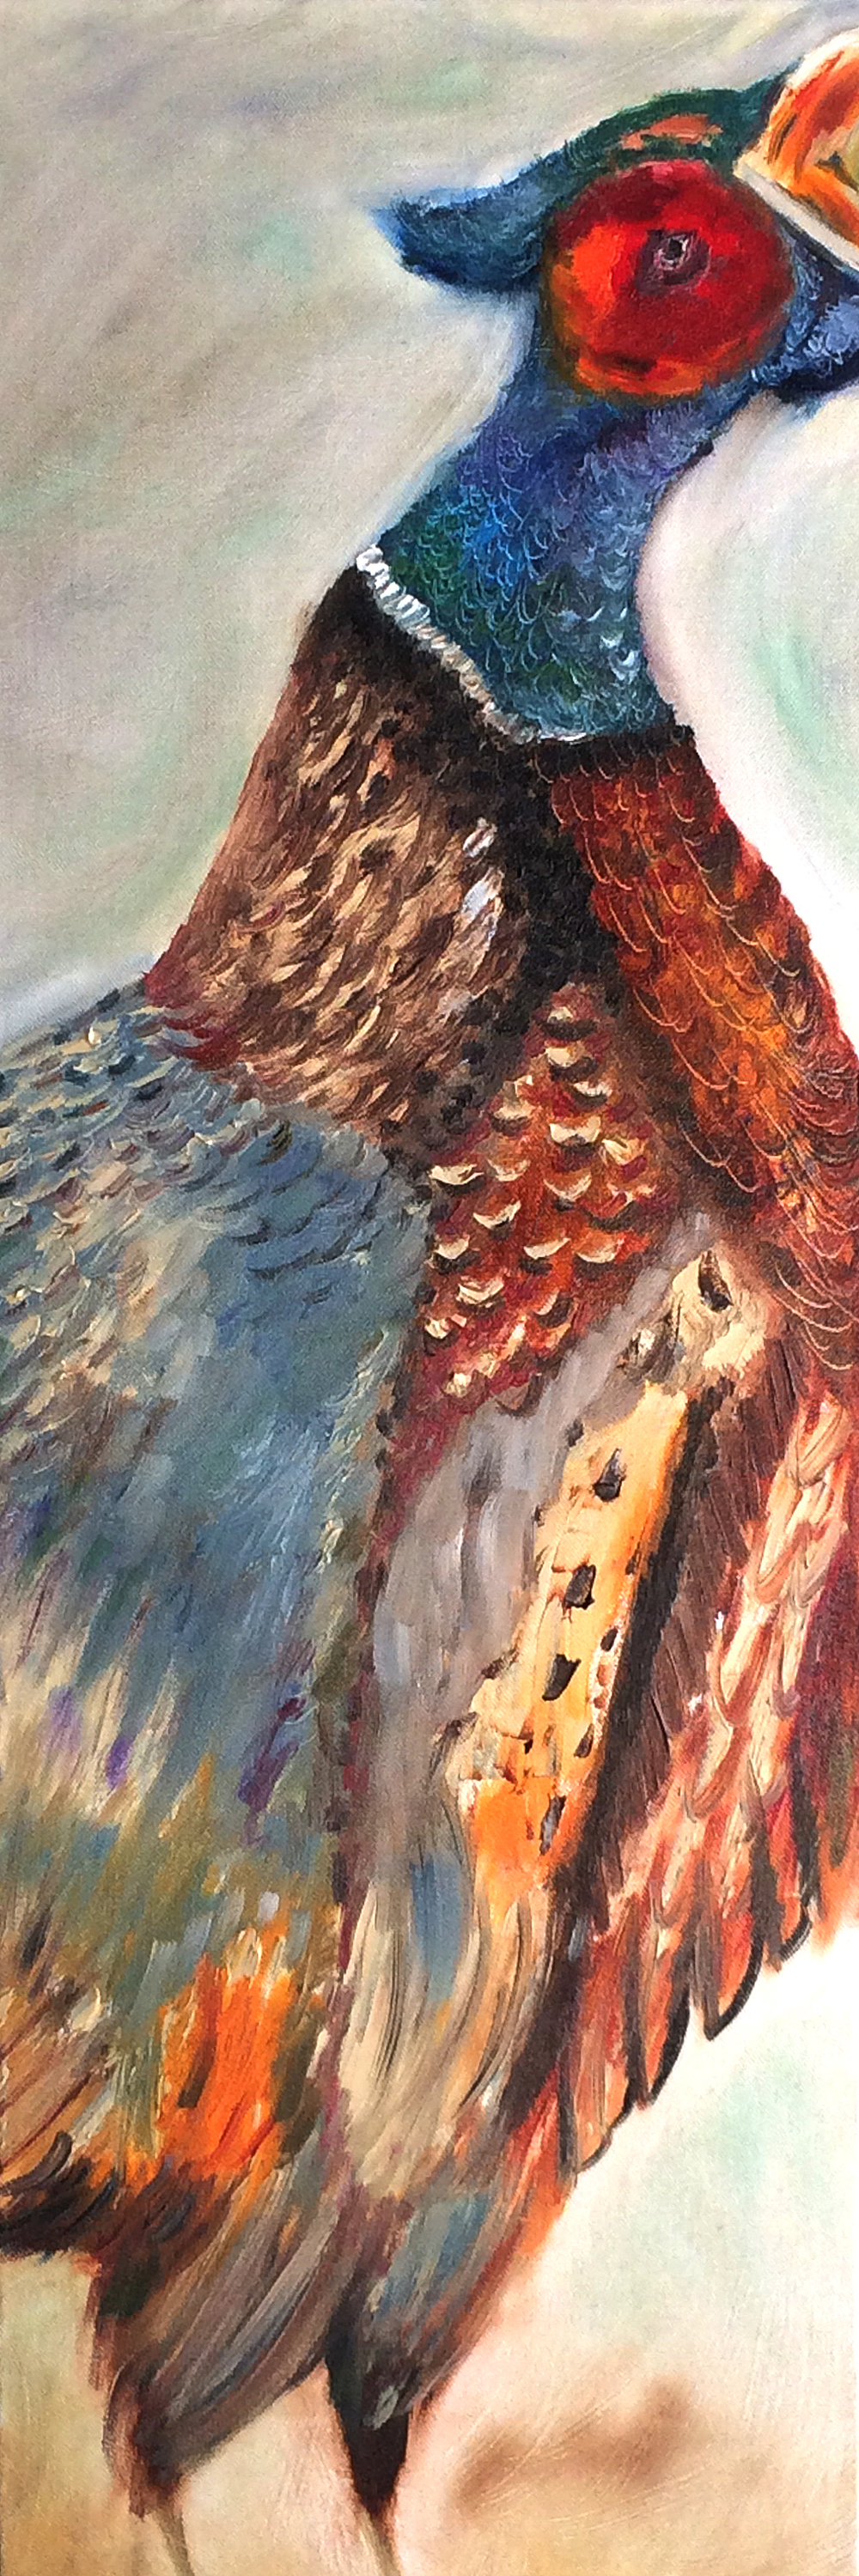 Pheasant 2020 oil on canvas 12x36 mariestephensart chavxj